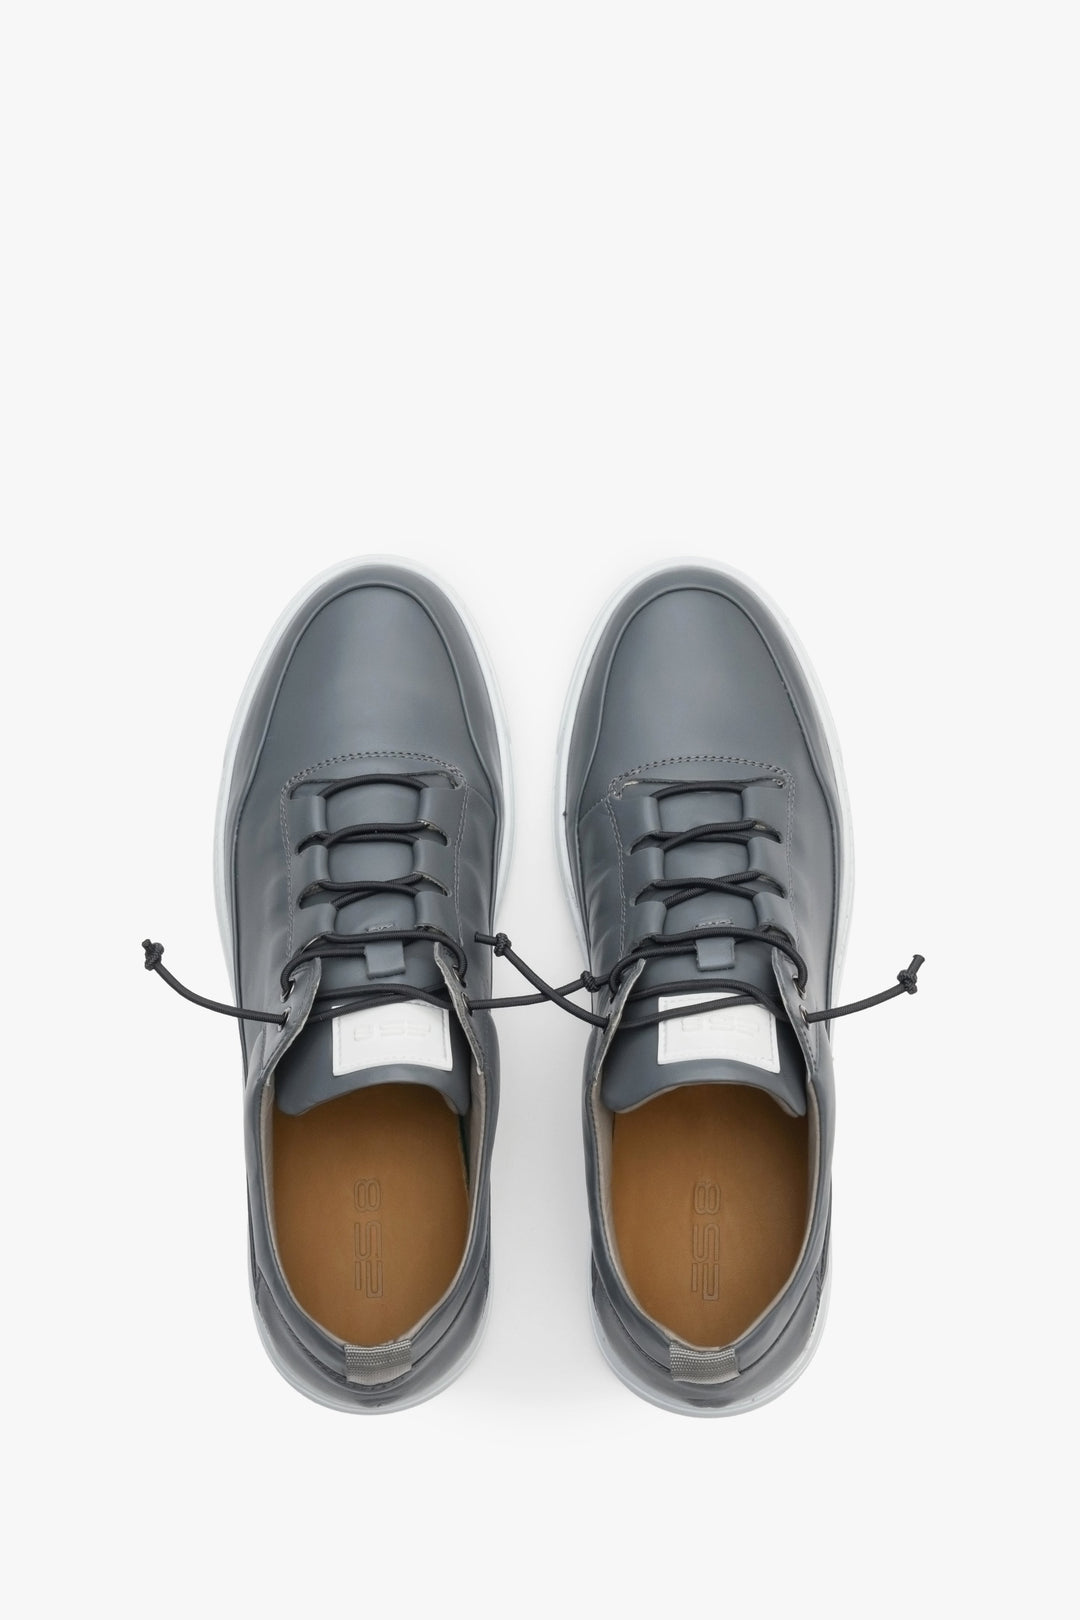 Men's grey sneakers made of genuine leather ES 8 - top view of the footwear.